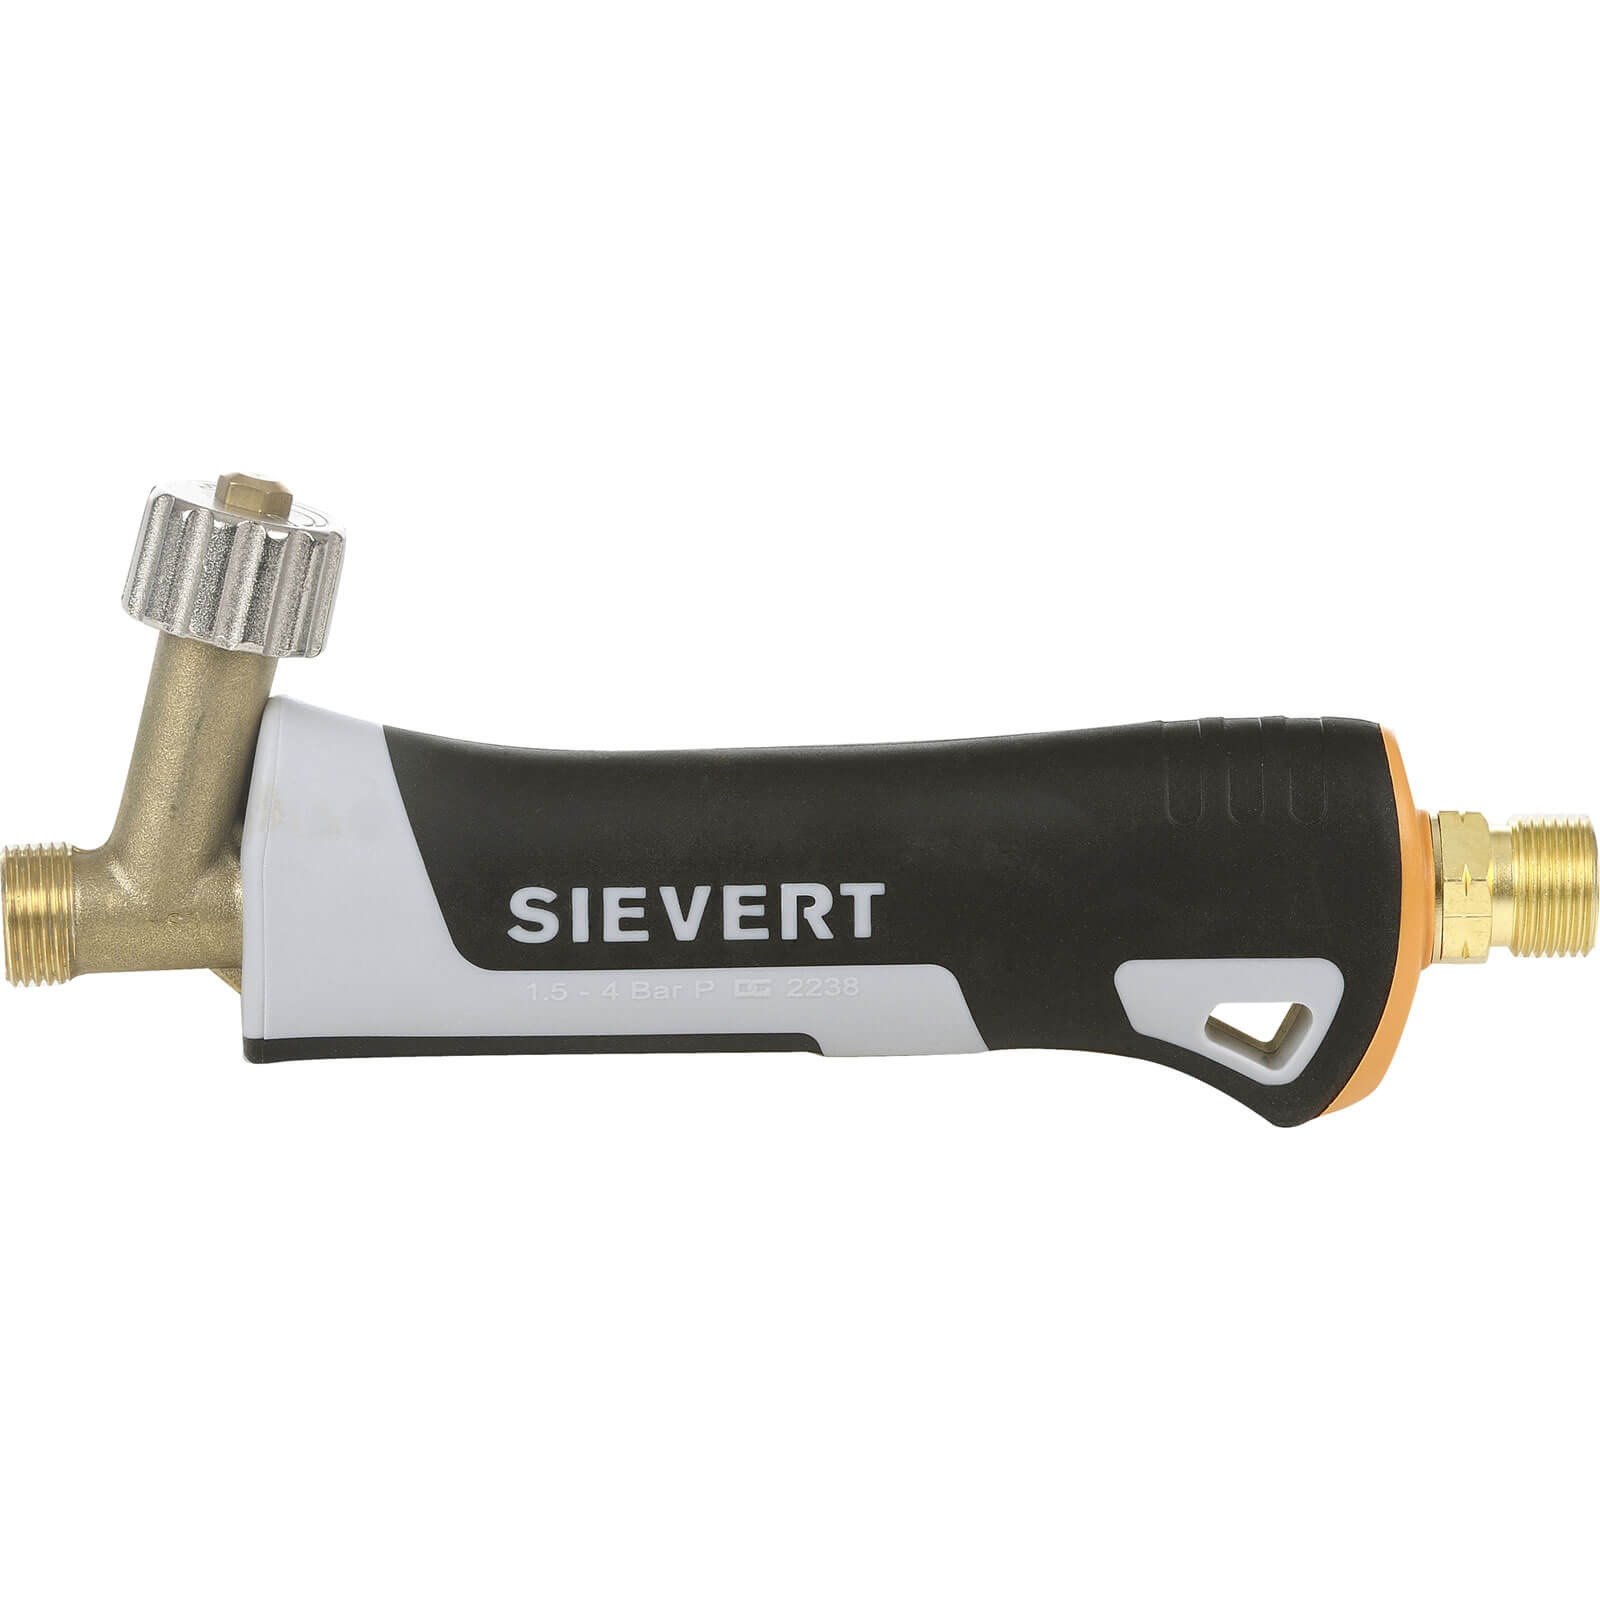 Sievert Pro 86 Handle S3486